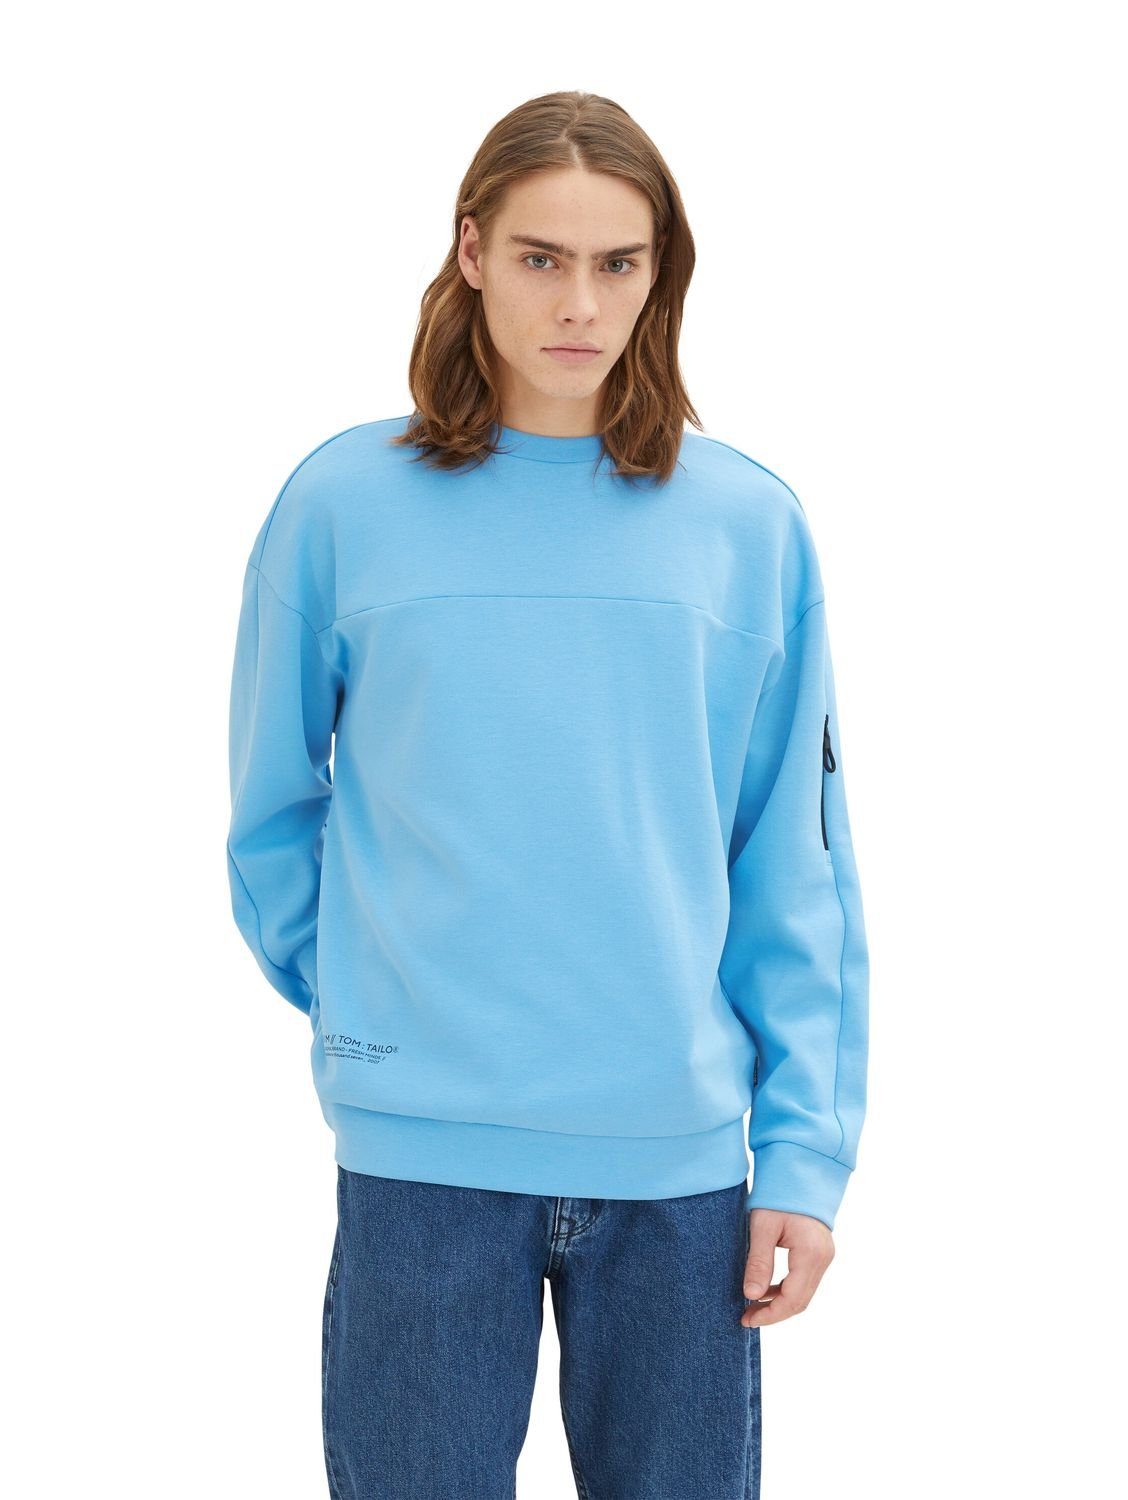 TOM TAILOR Denim Sweatshirt RELAXED CREW aus Baumwolle Rainy Sky Blue 18395 | 